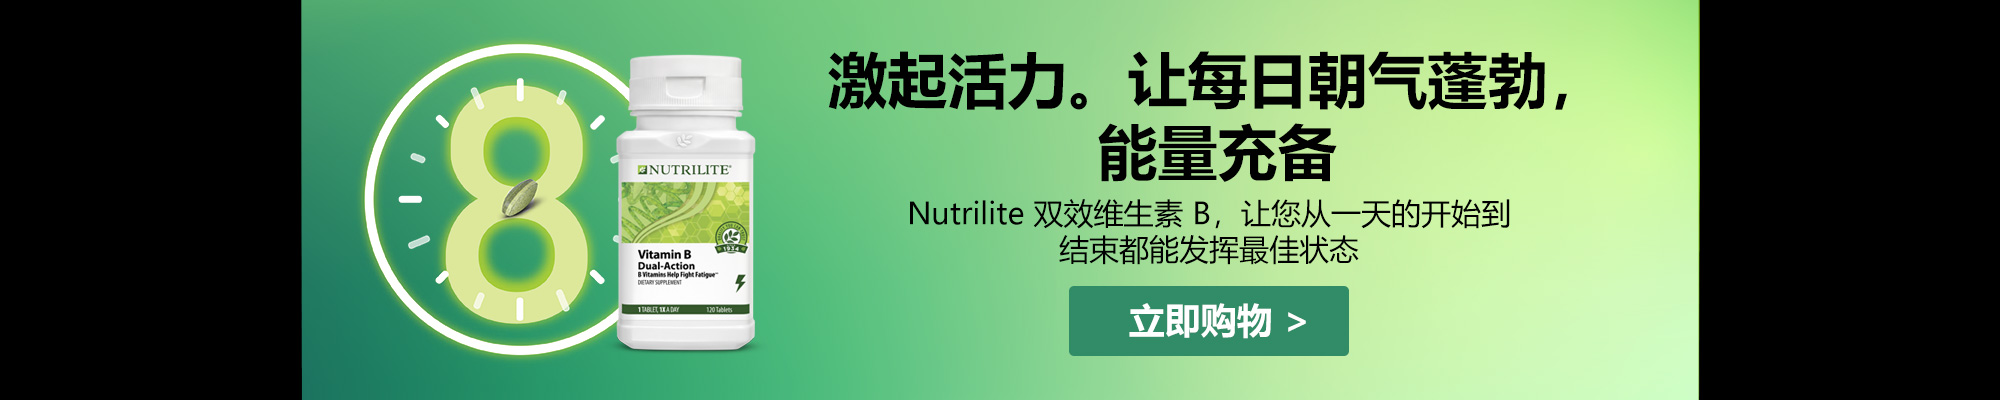 Nutrilite Vitamin B Dual-Action - 120 Tabs